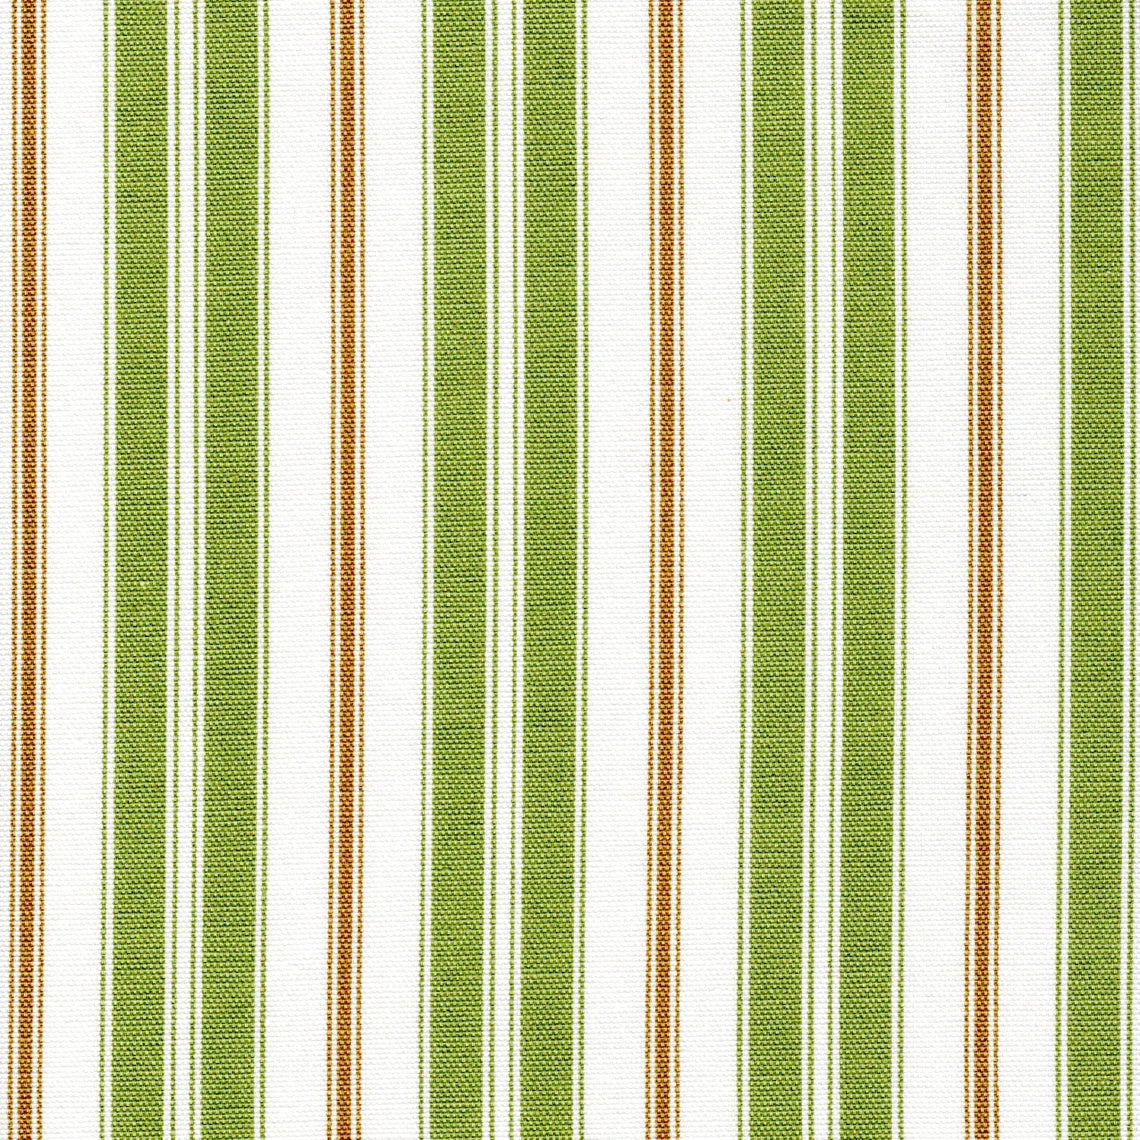 decorative pillows in newbury aloe green stripe- green, brown, white